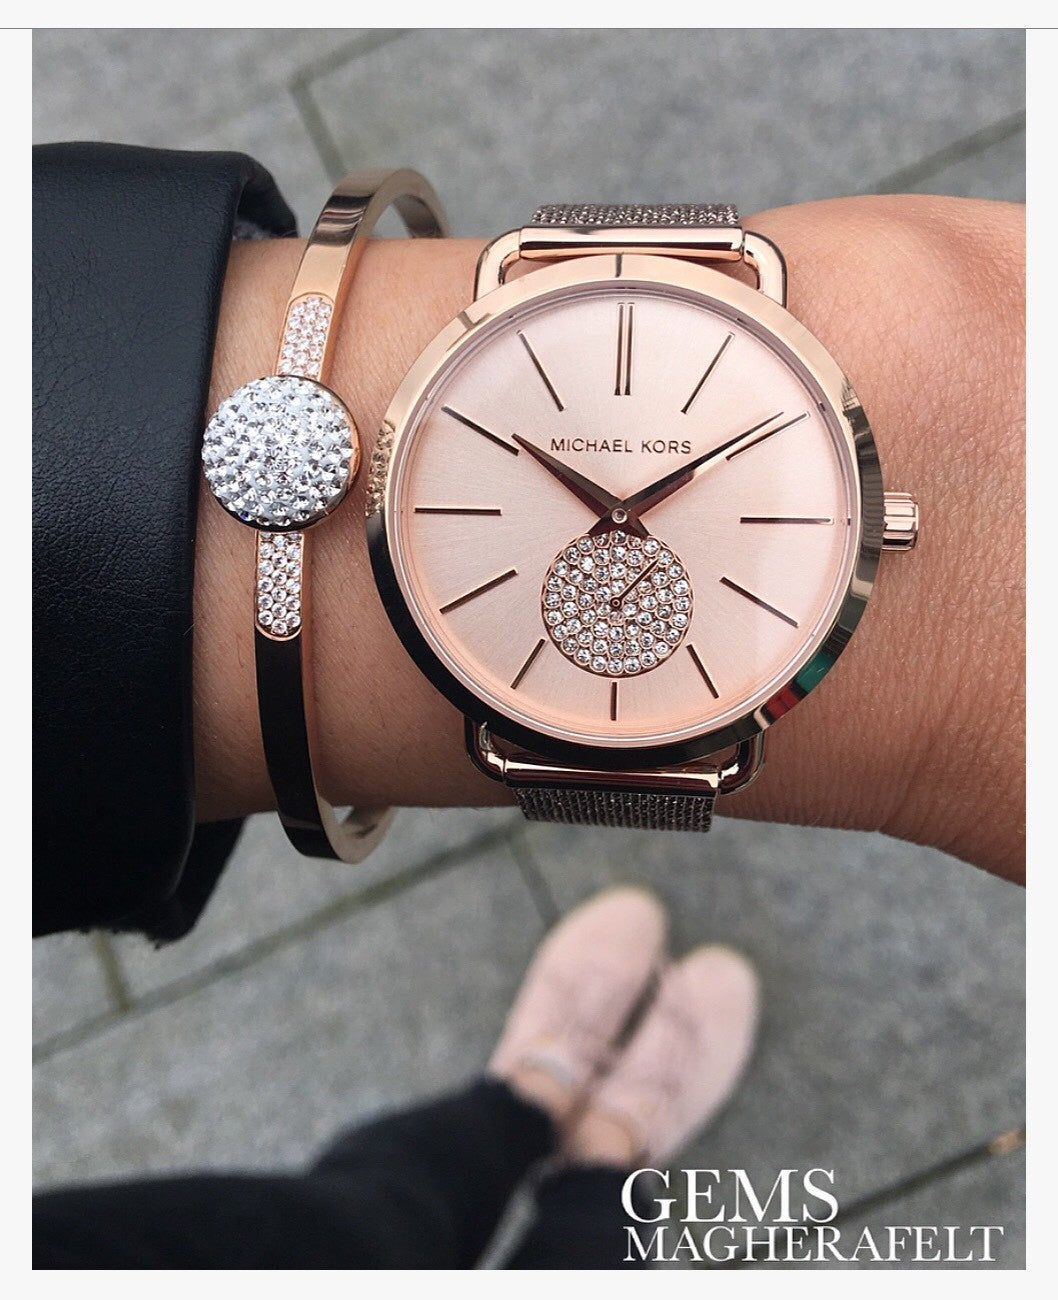 Amazoncom Michael Kors Womens Bradshaw GoldTone Watch MK5739  Michael  Kors Clothing Shoes  Jewelry